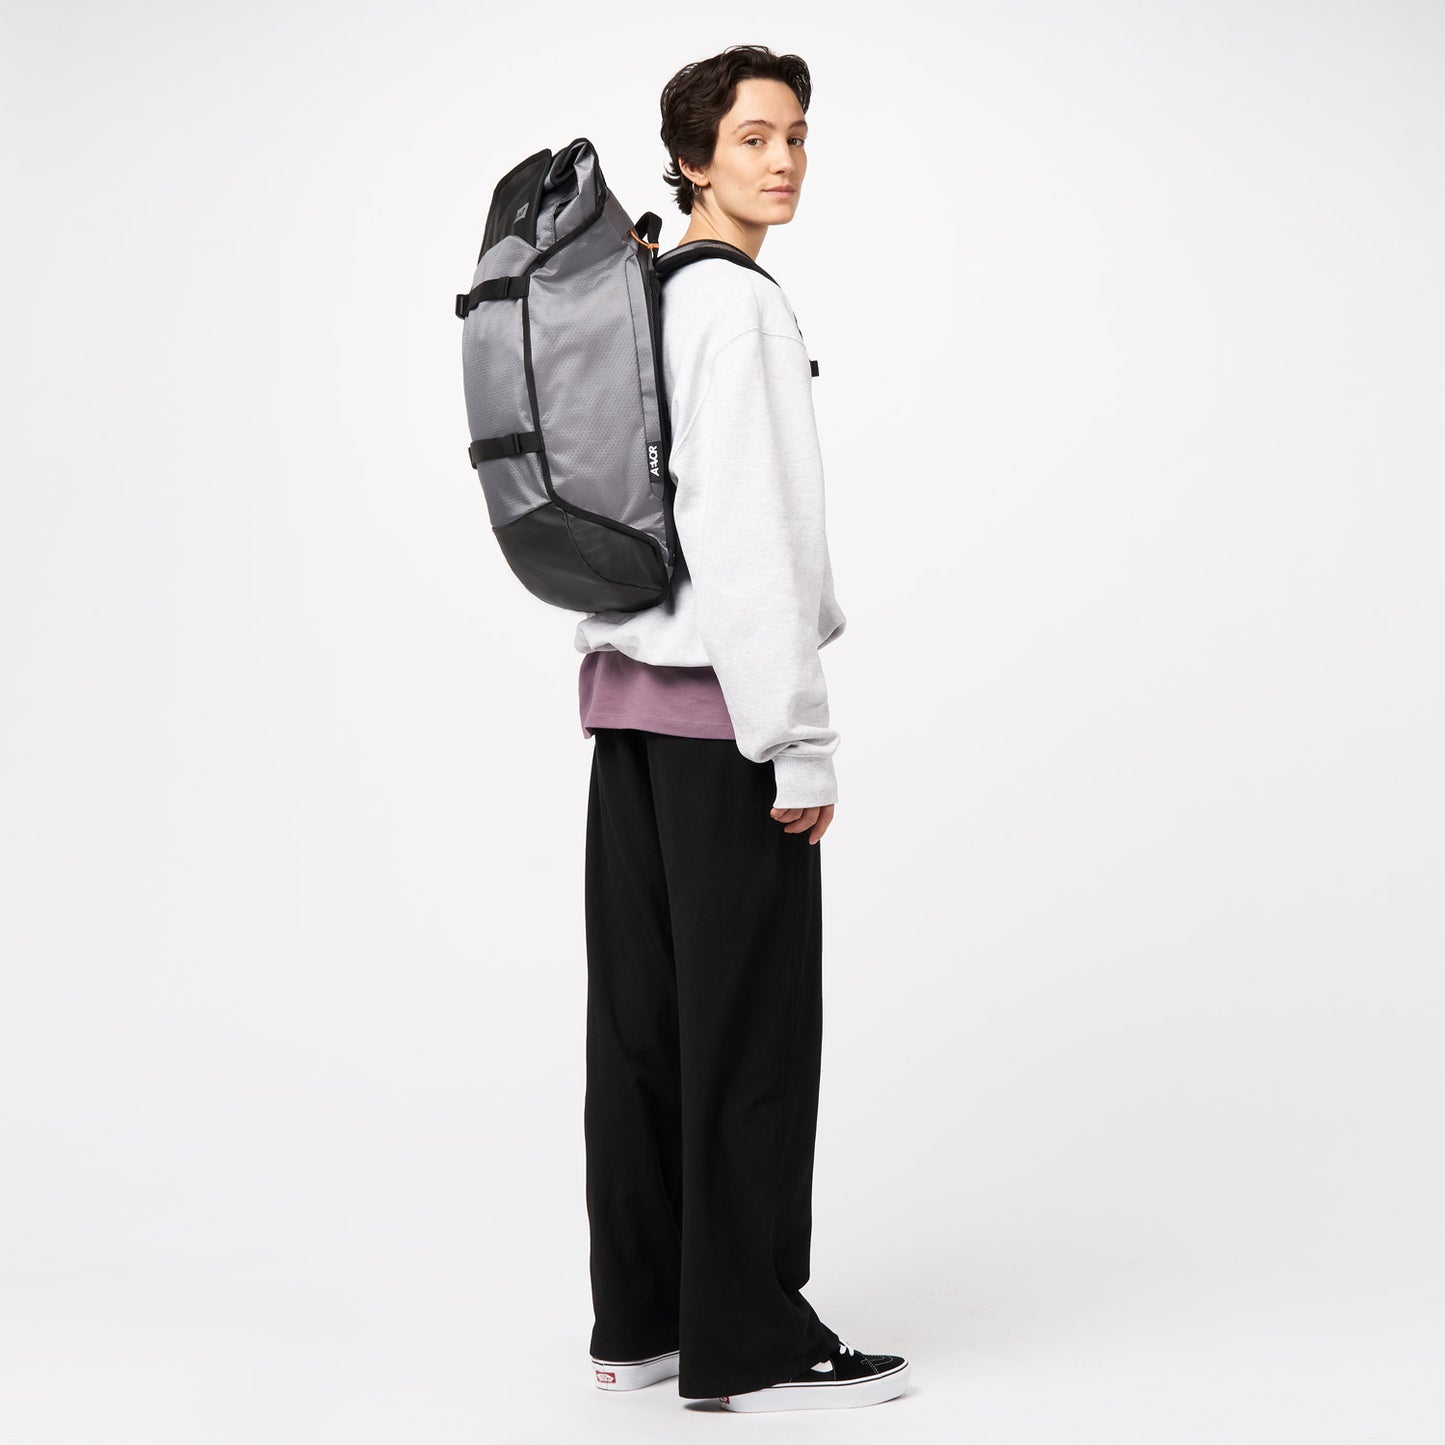 AEVOR-backpack-Trip-Pack-Proof-Sundown-model-side